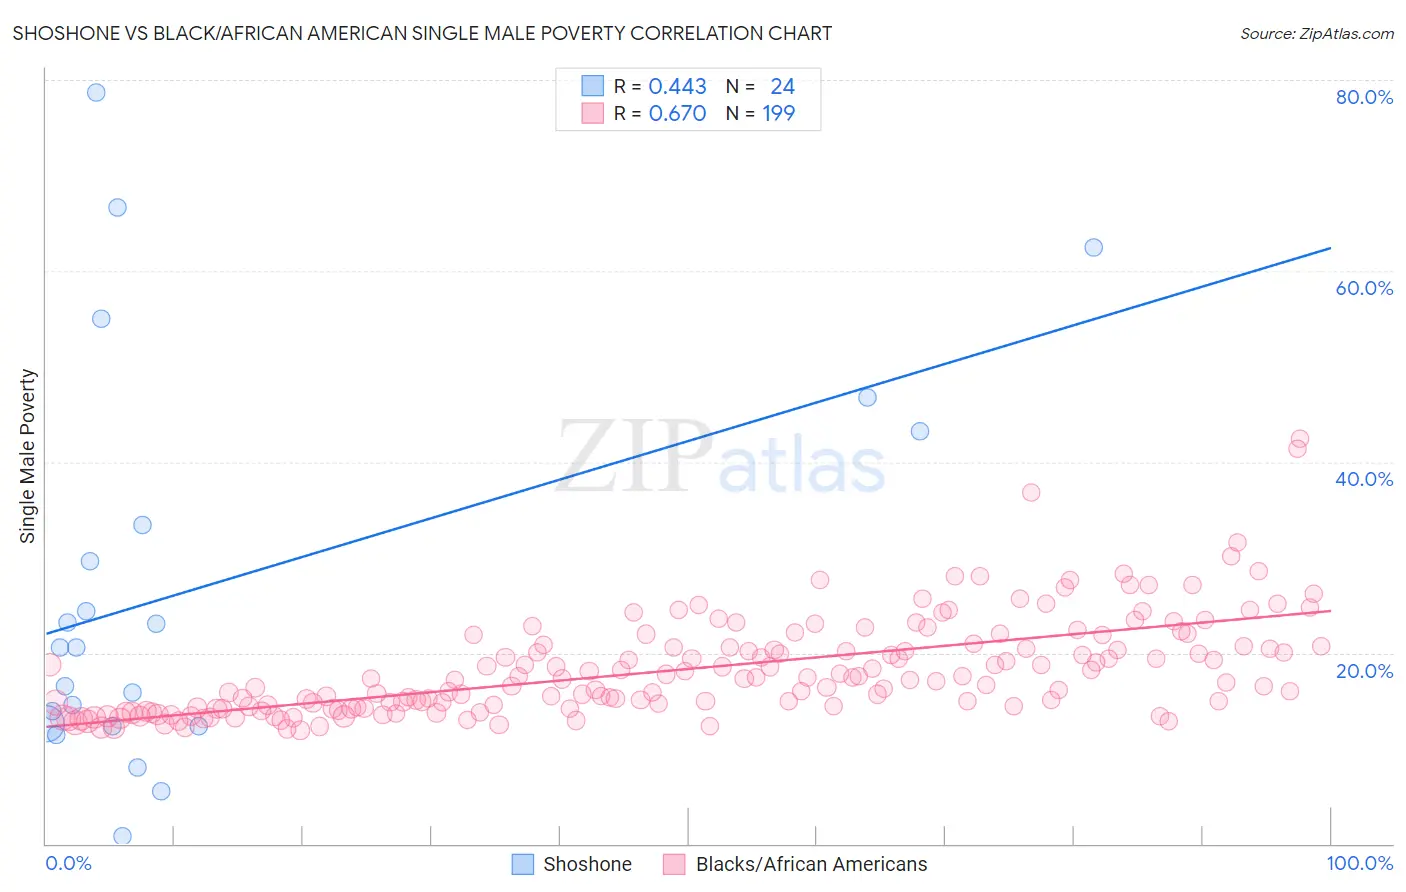 Shoshone vs Black/African American Single Male Poverty